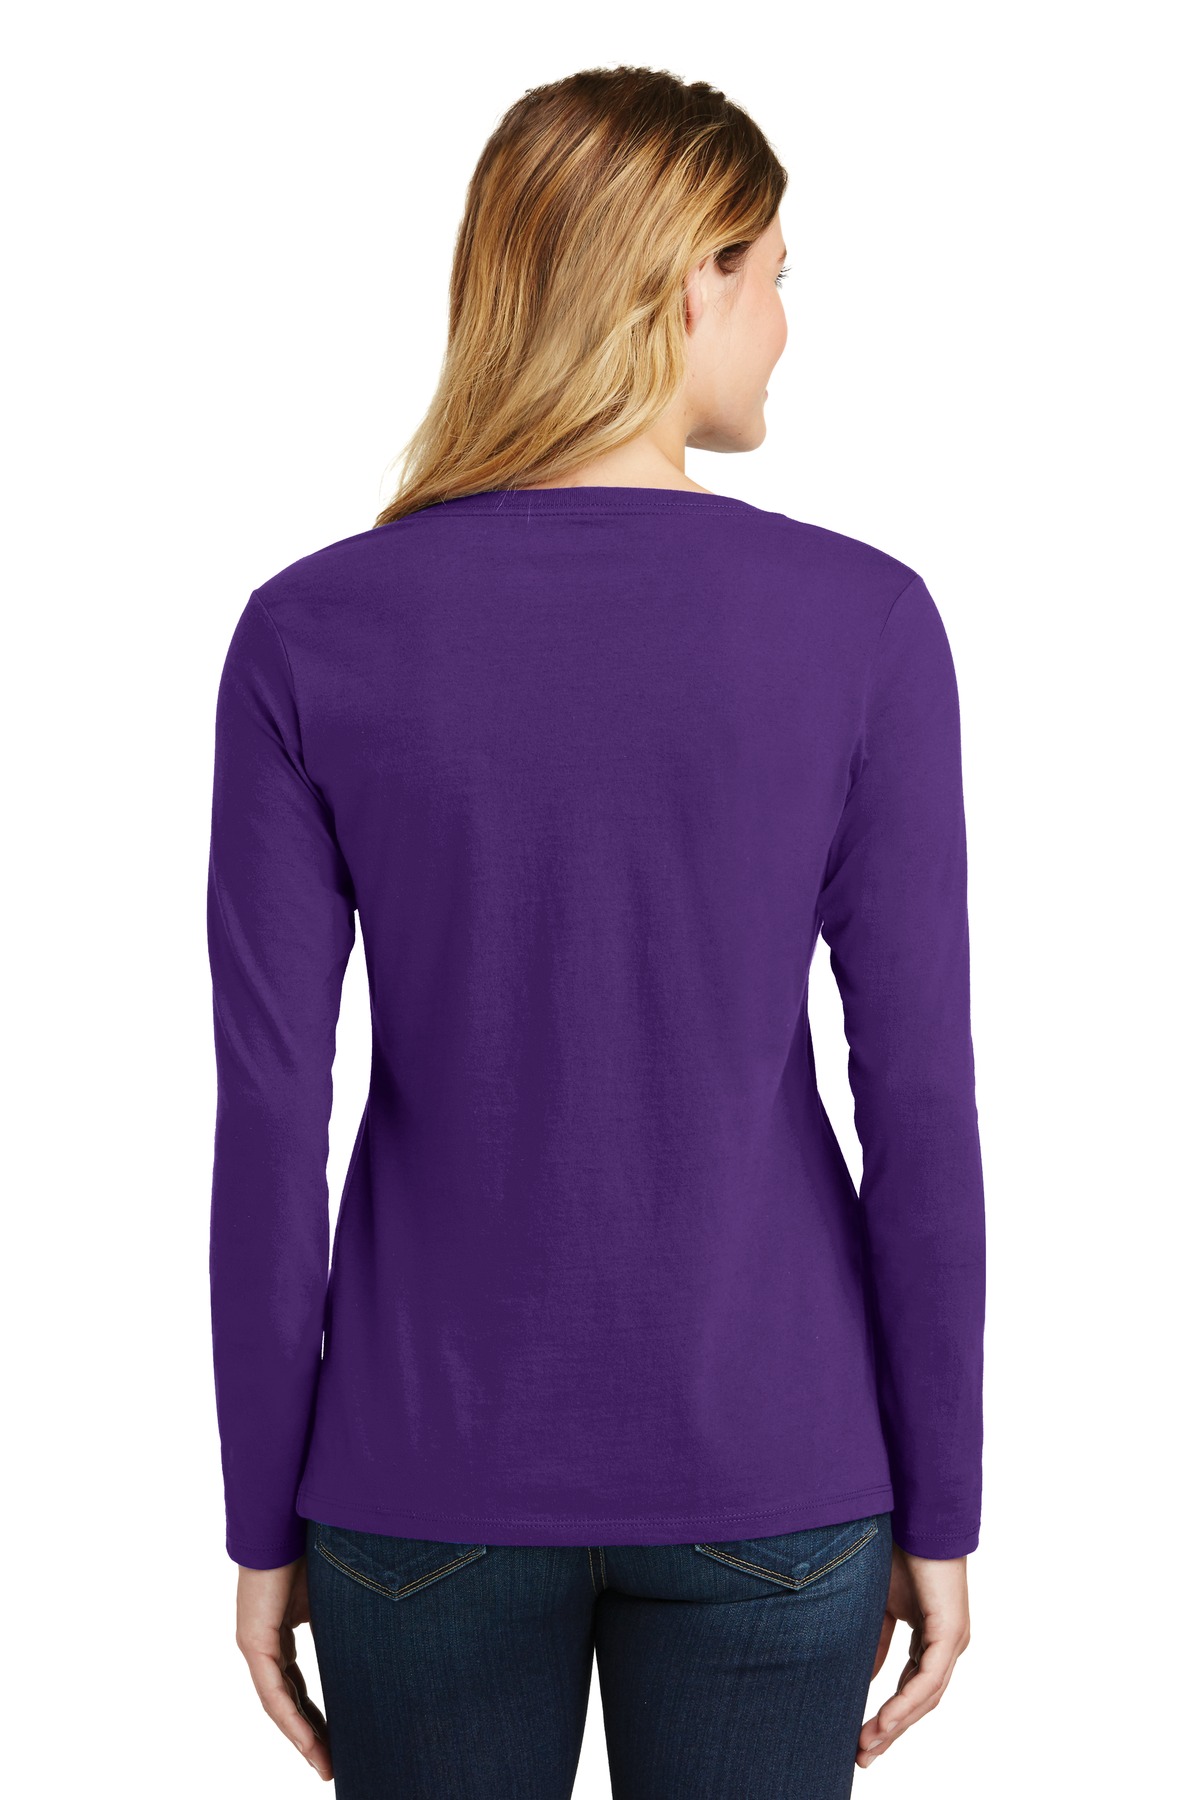 Port & Company Ladies Long Sleeve Fan Favorite V Neck Tee-4XL (Team Purple) - image 2 of 6